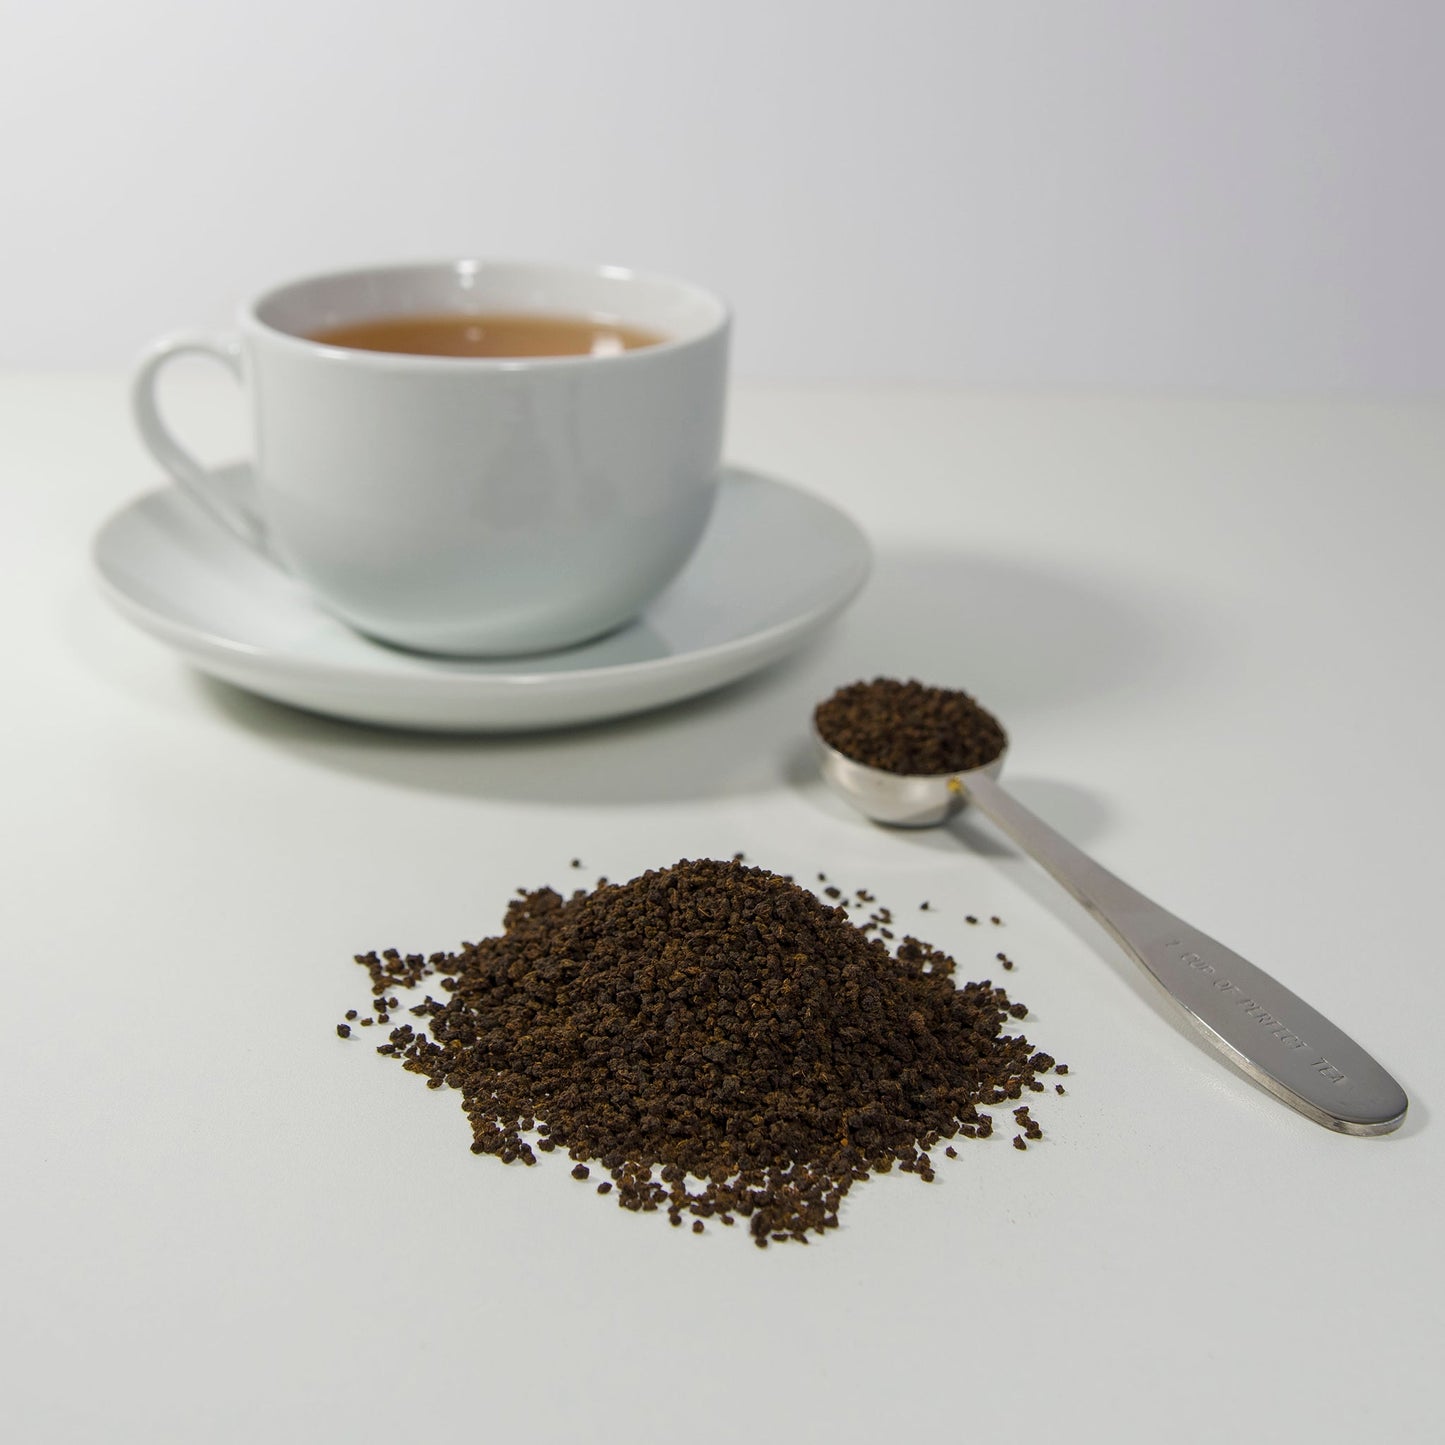 assam breakfast tea teacup and spoon newquay breakfast tea brew cuppa 